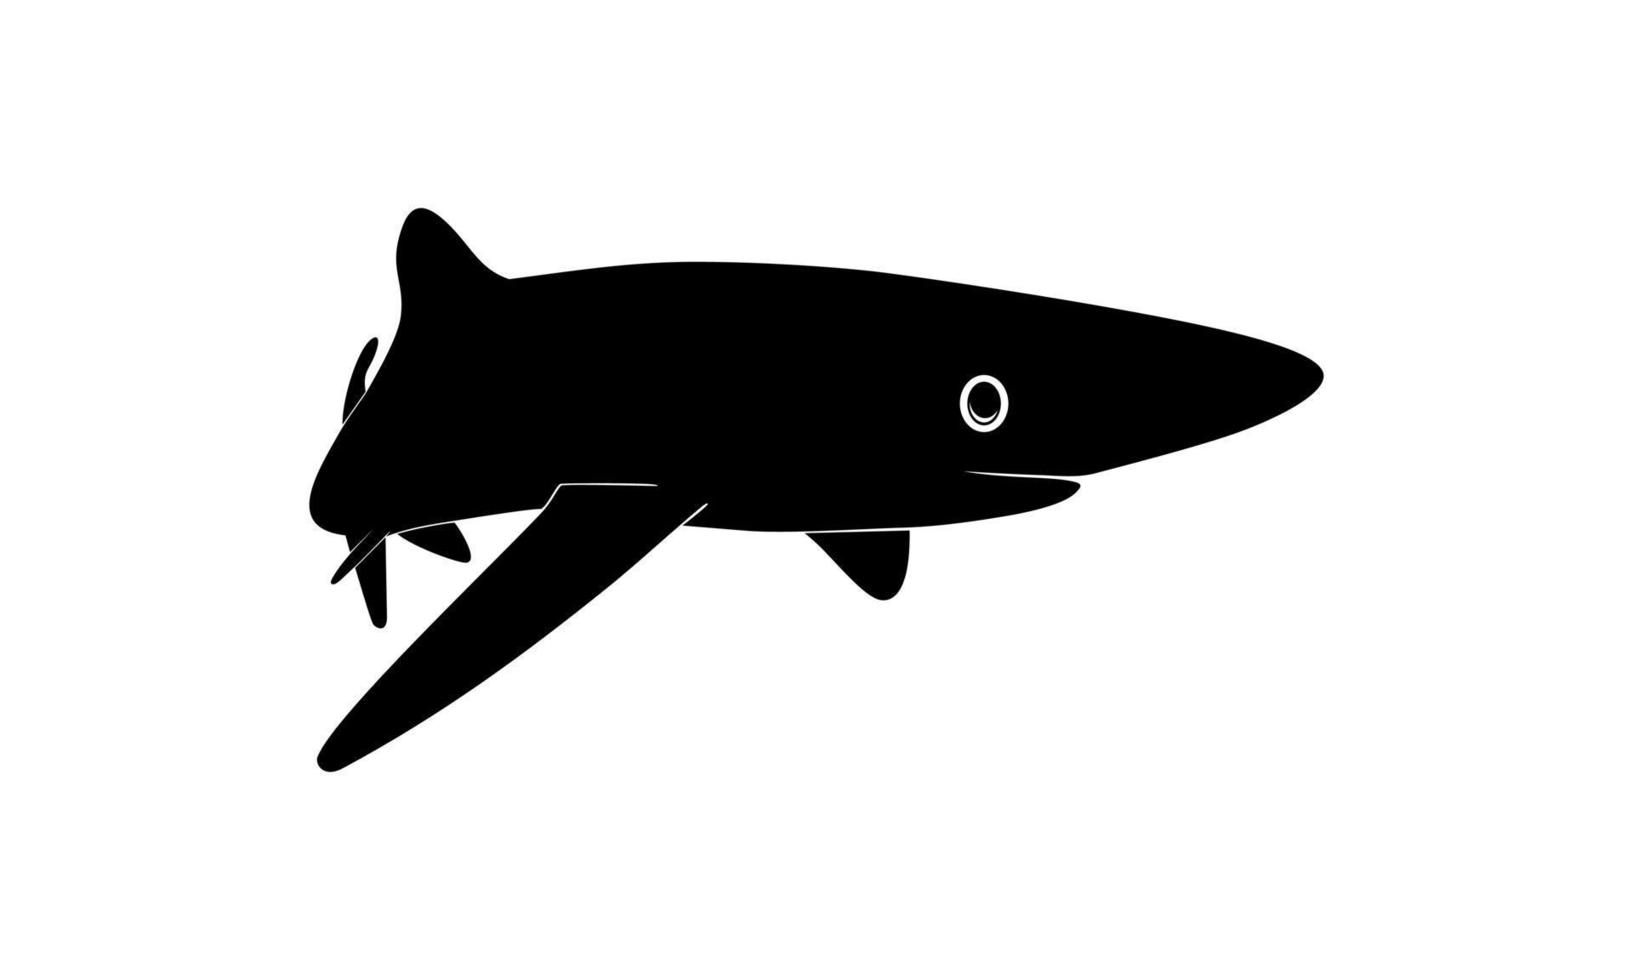 Shark Silhouette for Logo, Pictogram, Website, Art Illustration, Infographic, or Graphic Design Element. Vector Illustration